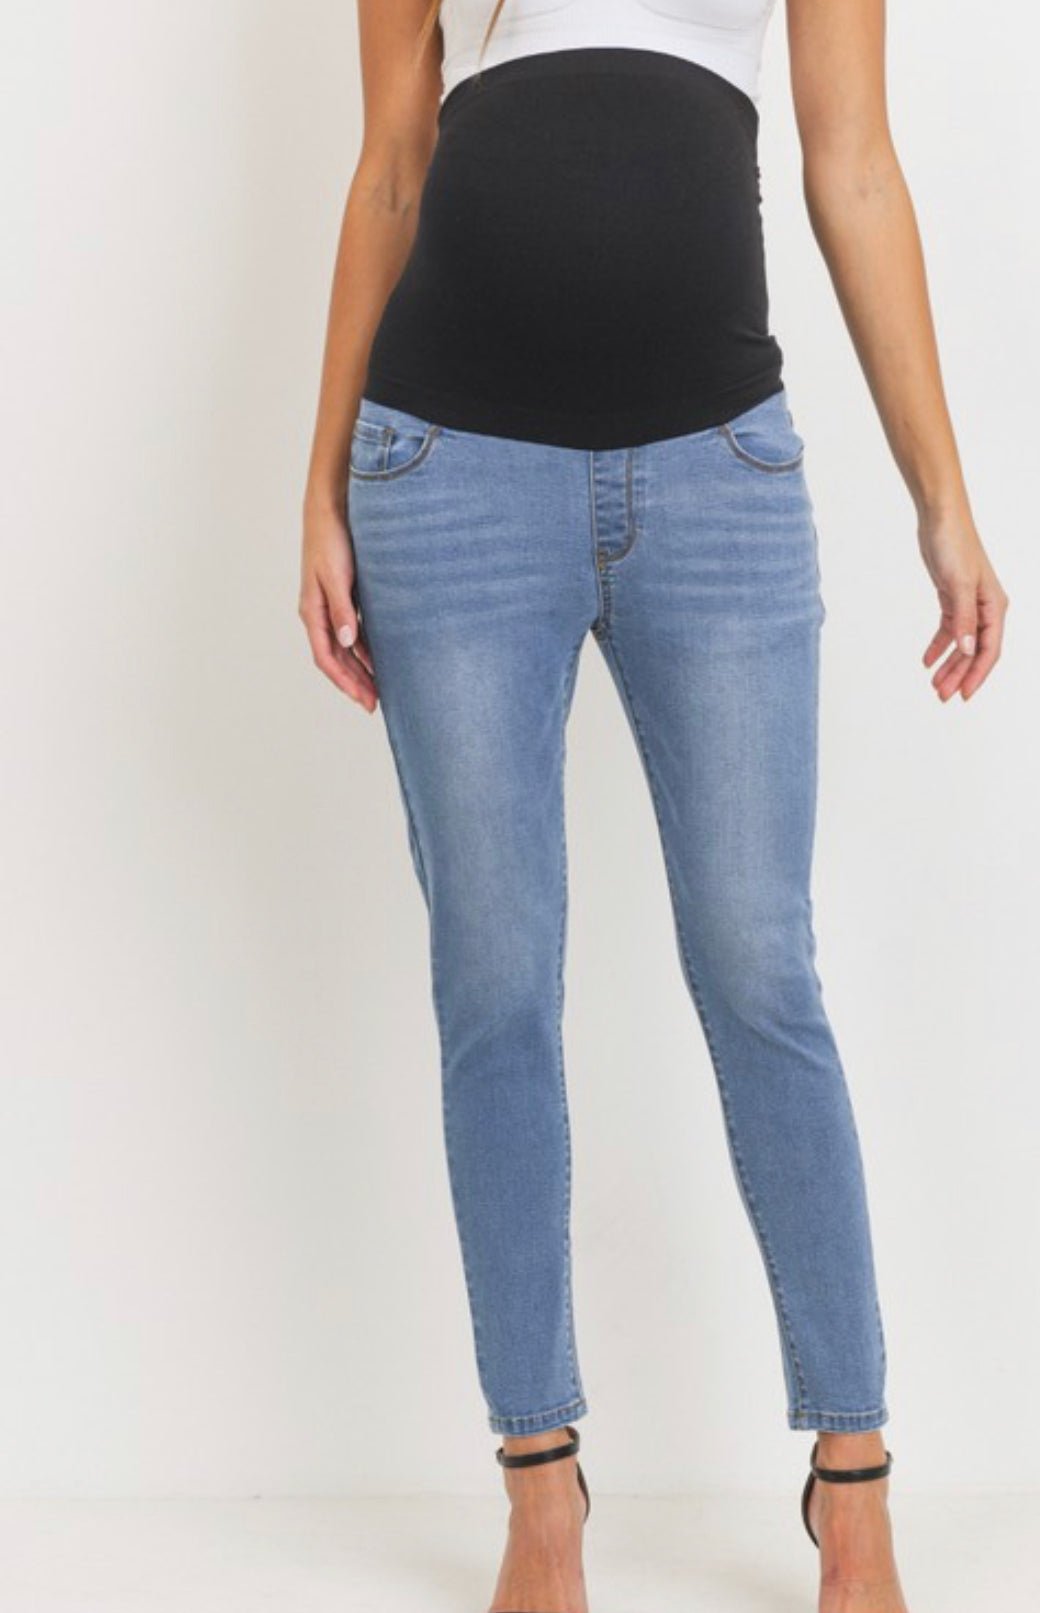 Light Denim Jeans - The Bump & Company LLC